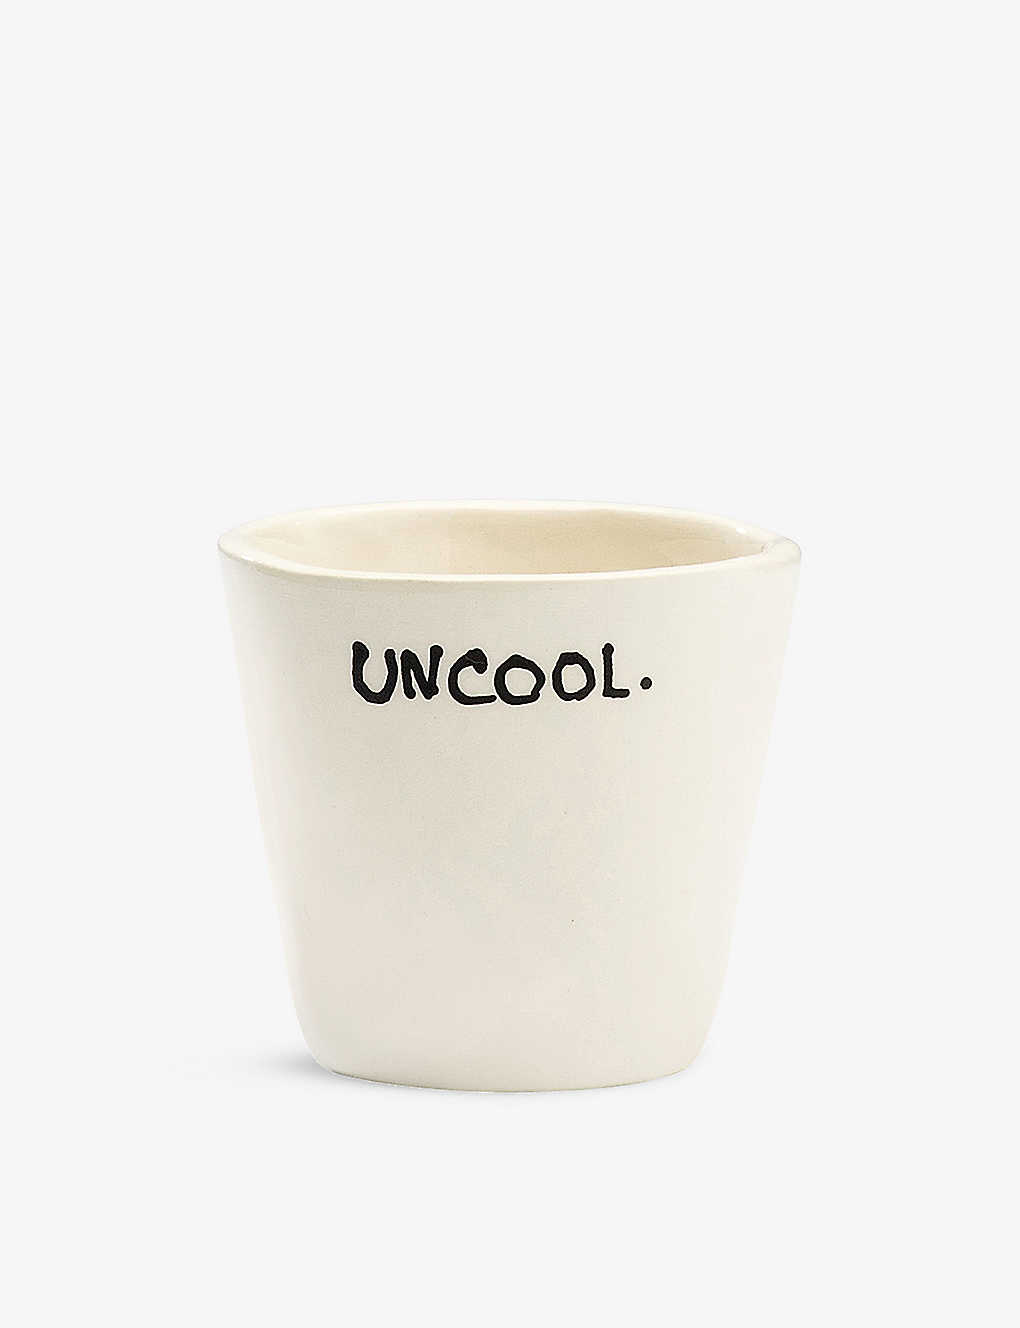 Anna + Nina Uncool Ceramic Espresso Cup 7.6cm